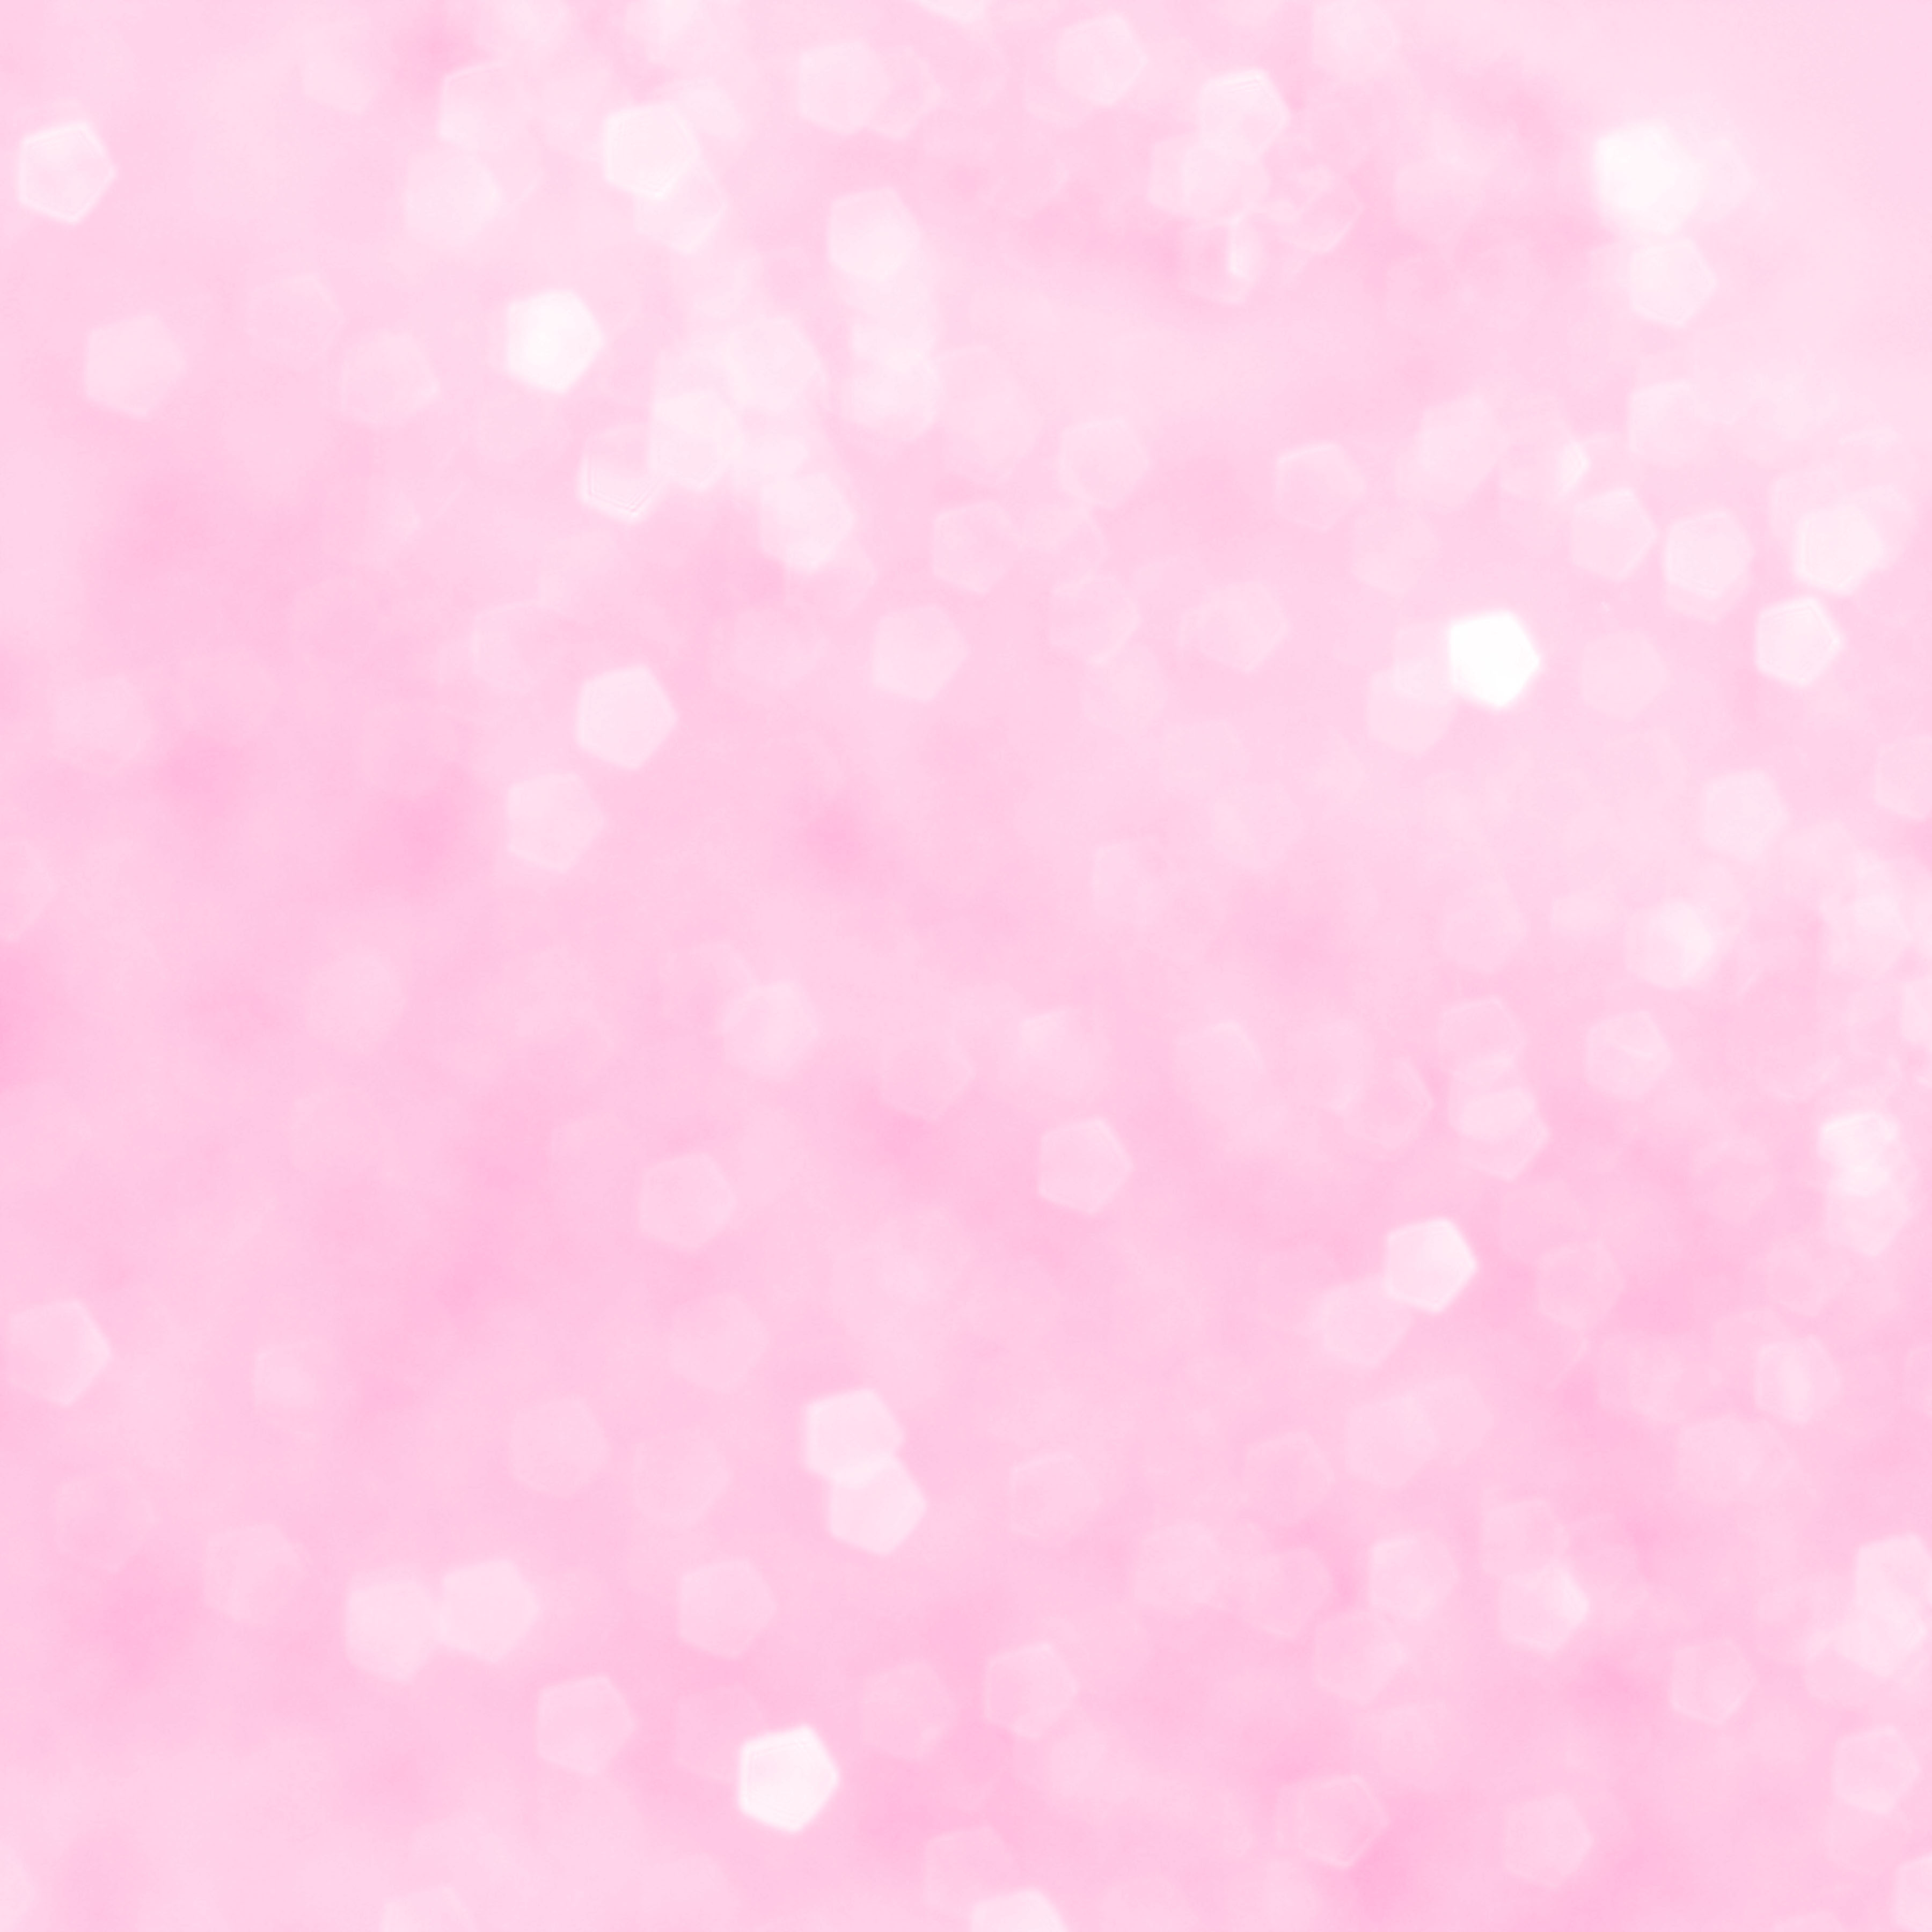 [49+] Soft Pink Backgrounds - WallpaperSafari